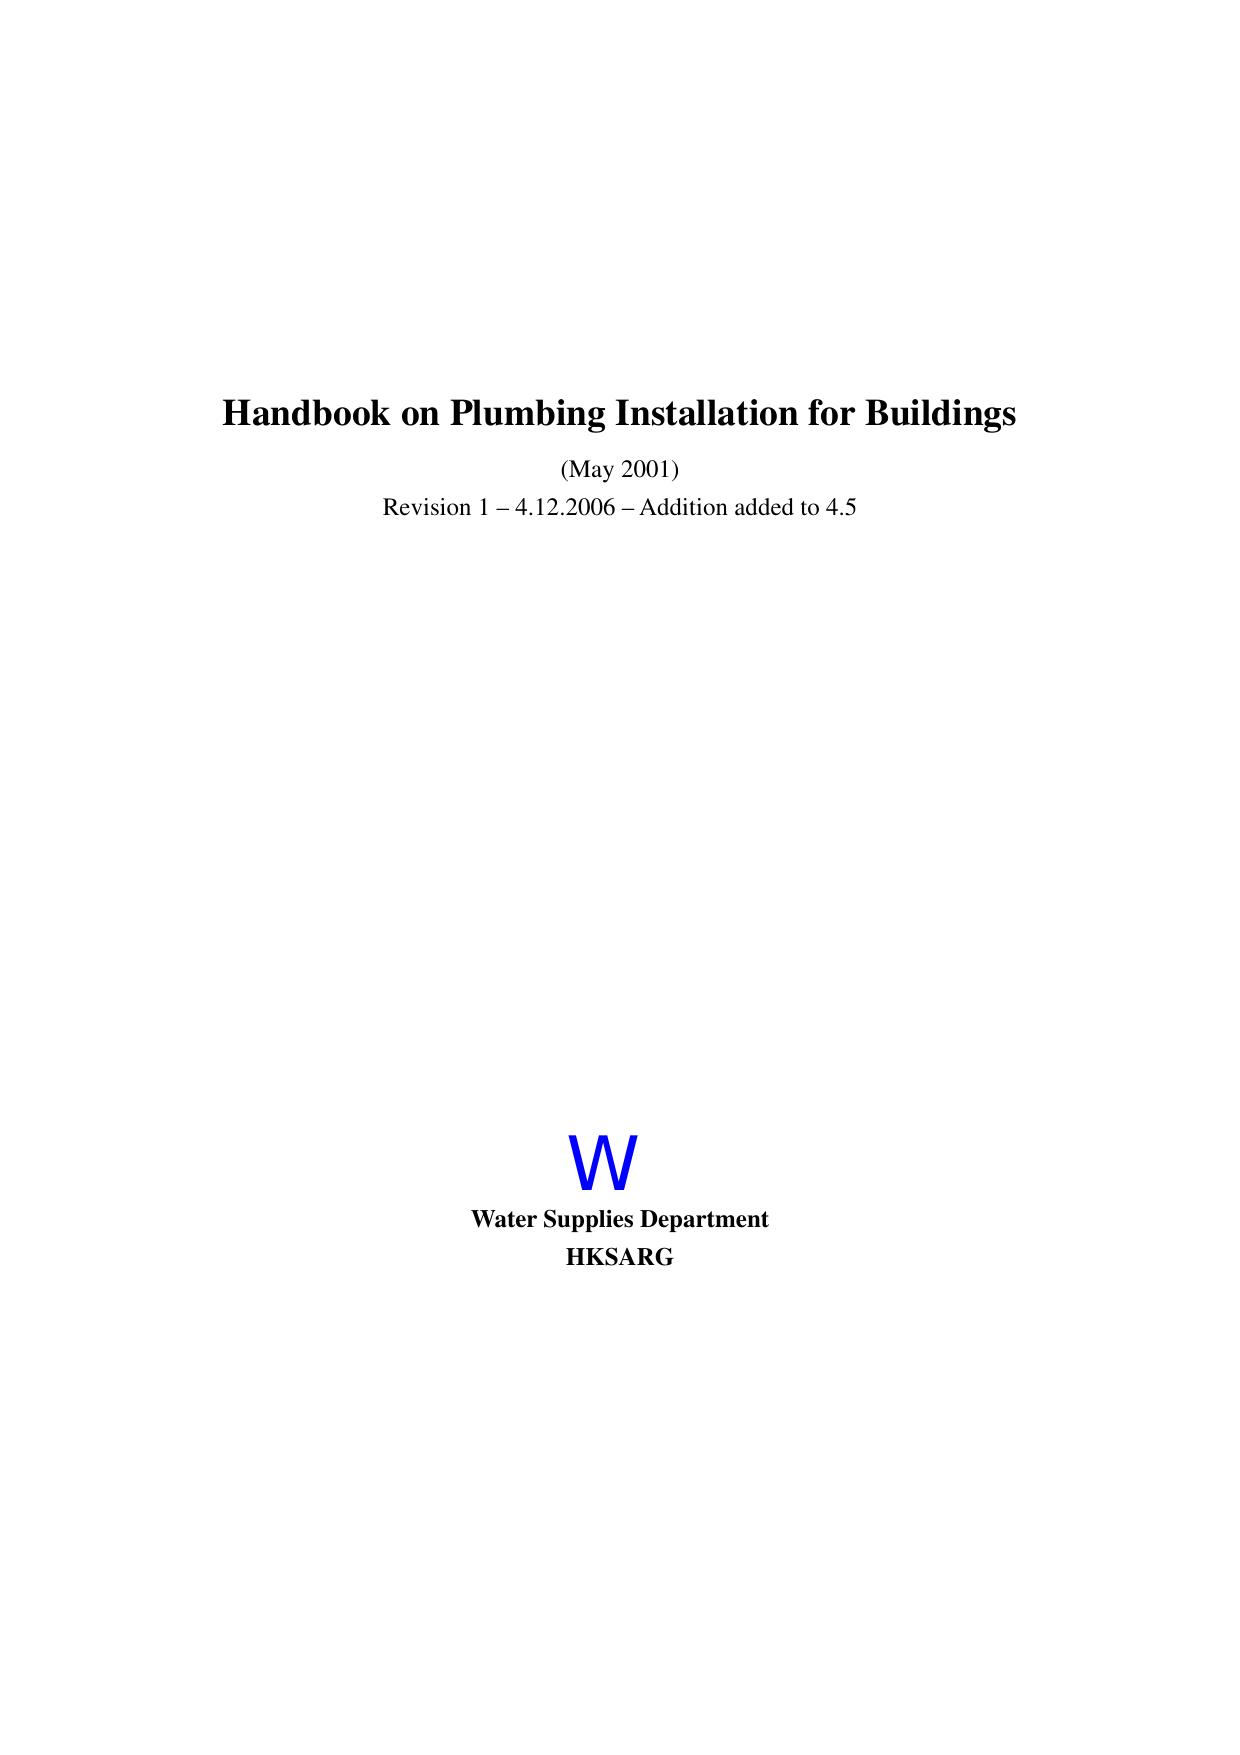 Handbook on Plumbing Installation for Buildings 2001